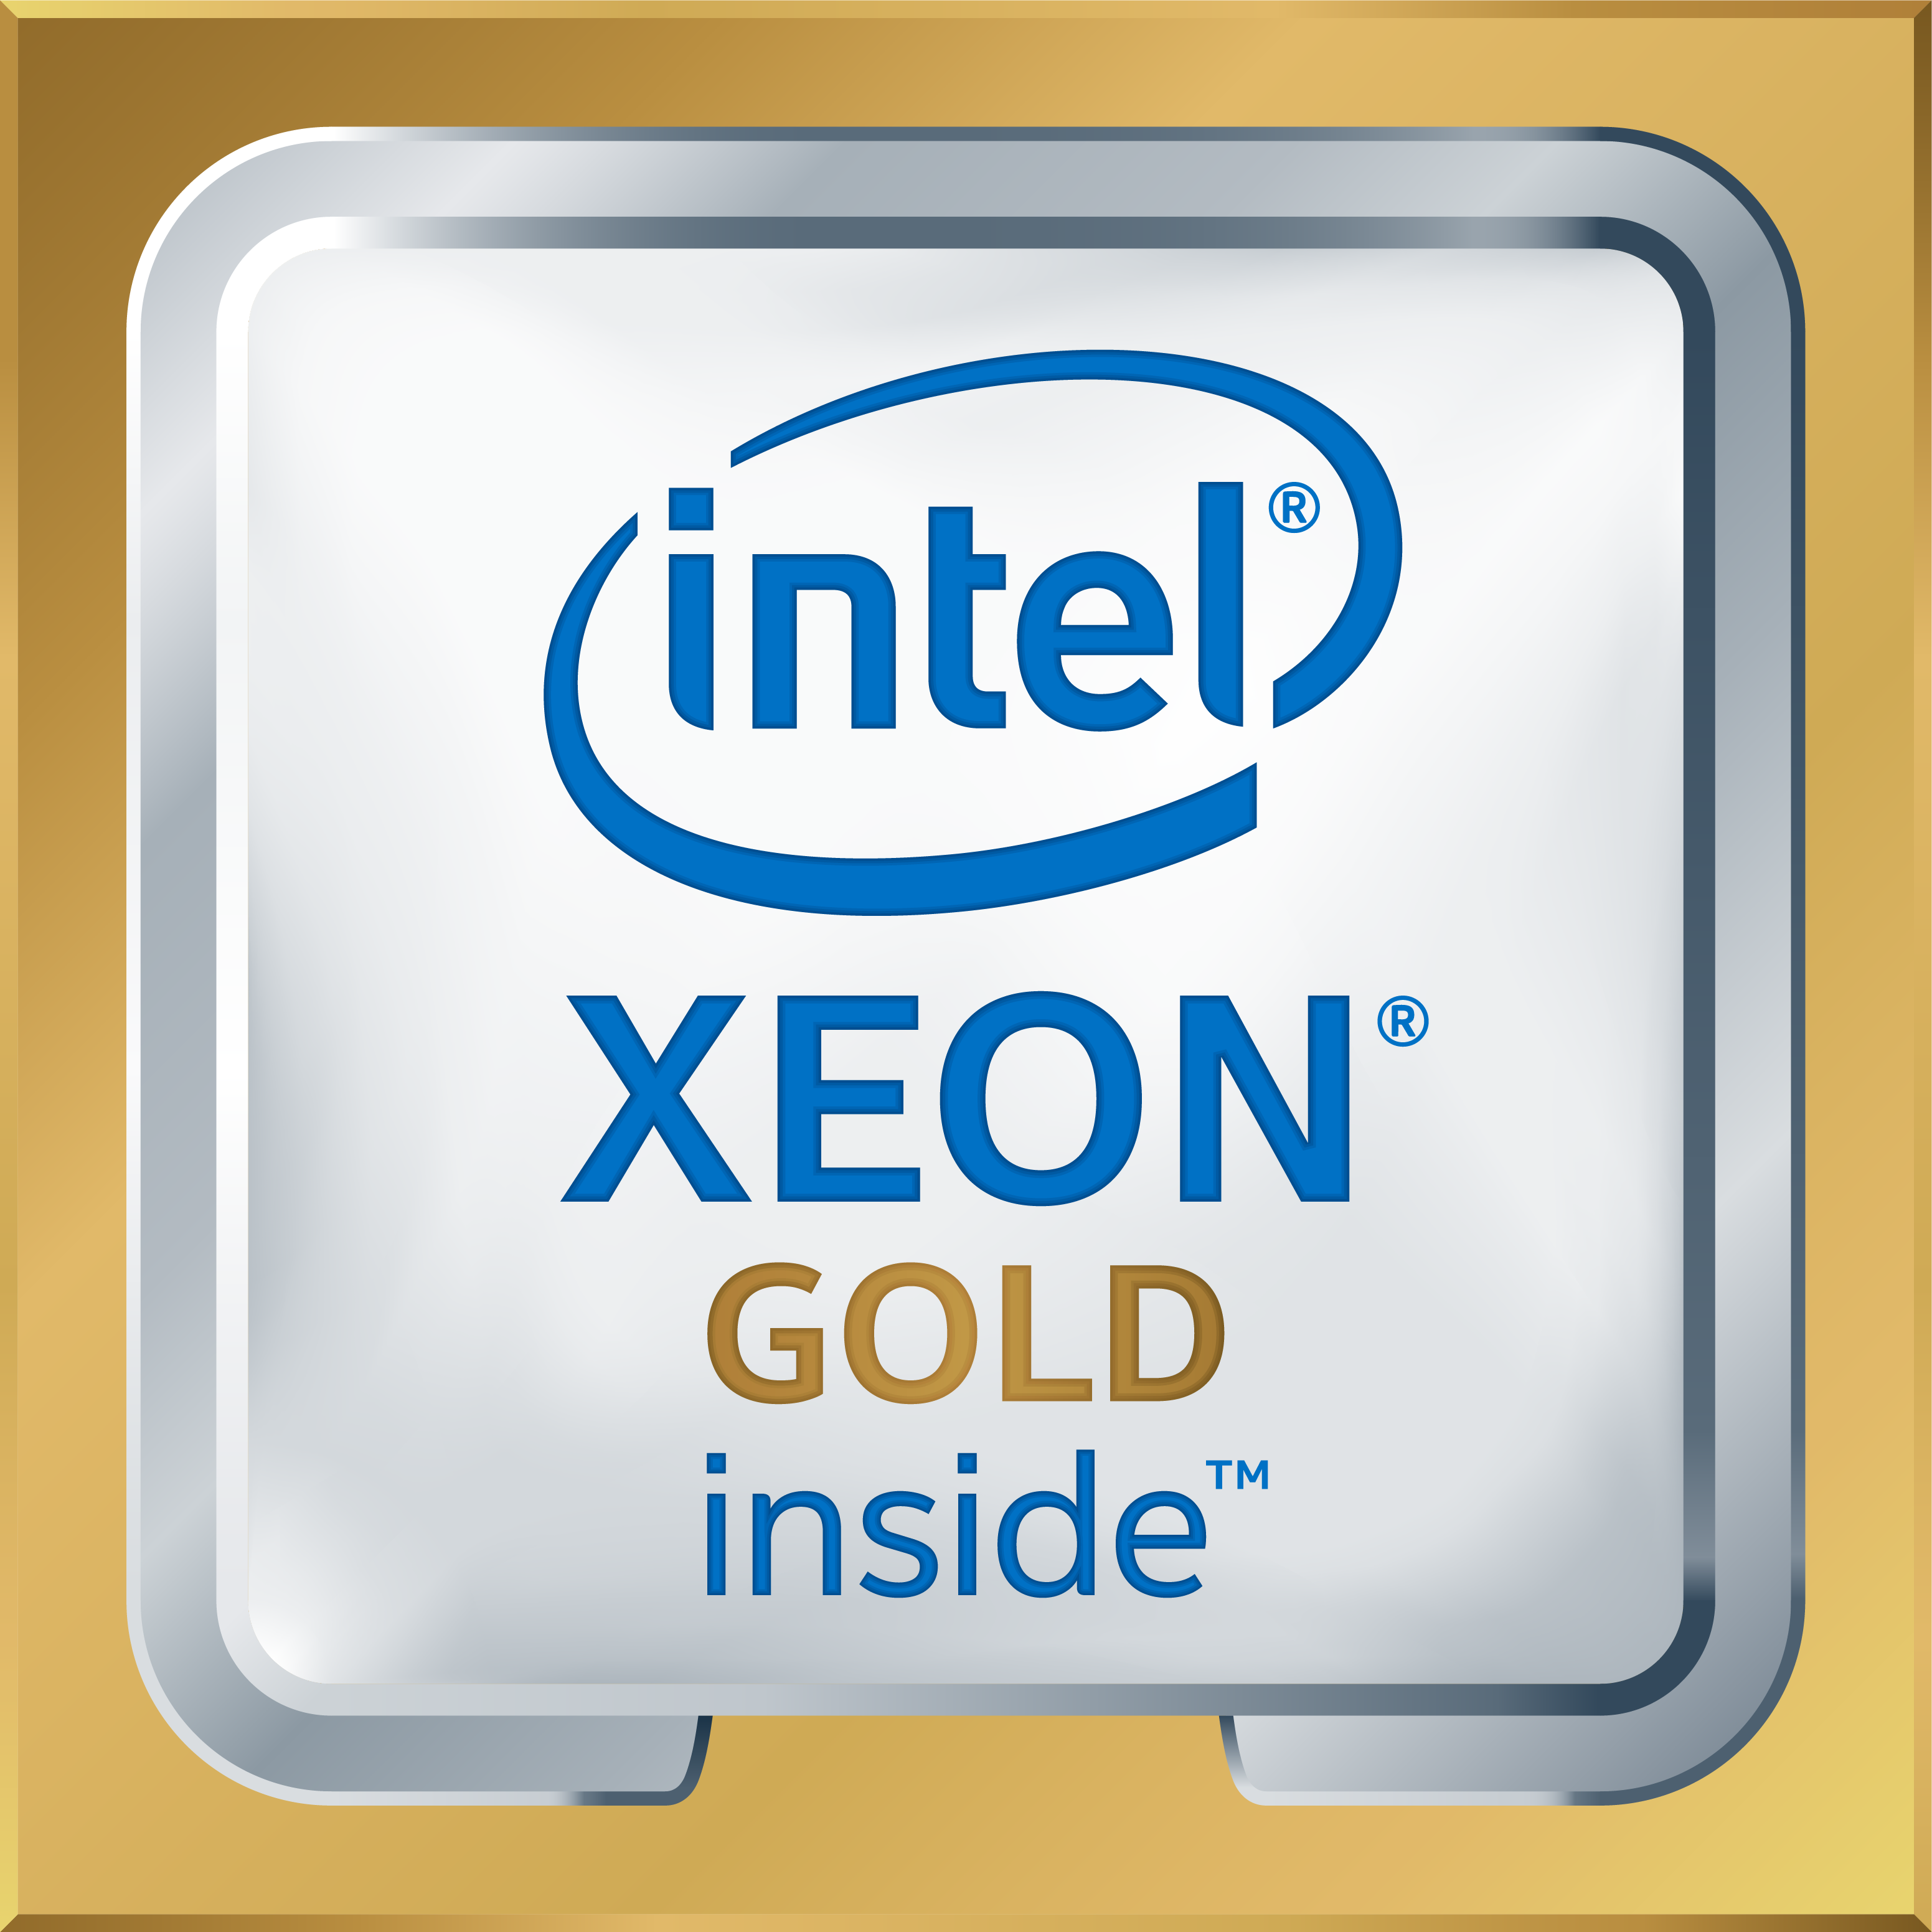 Intel Xeon 5122